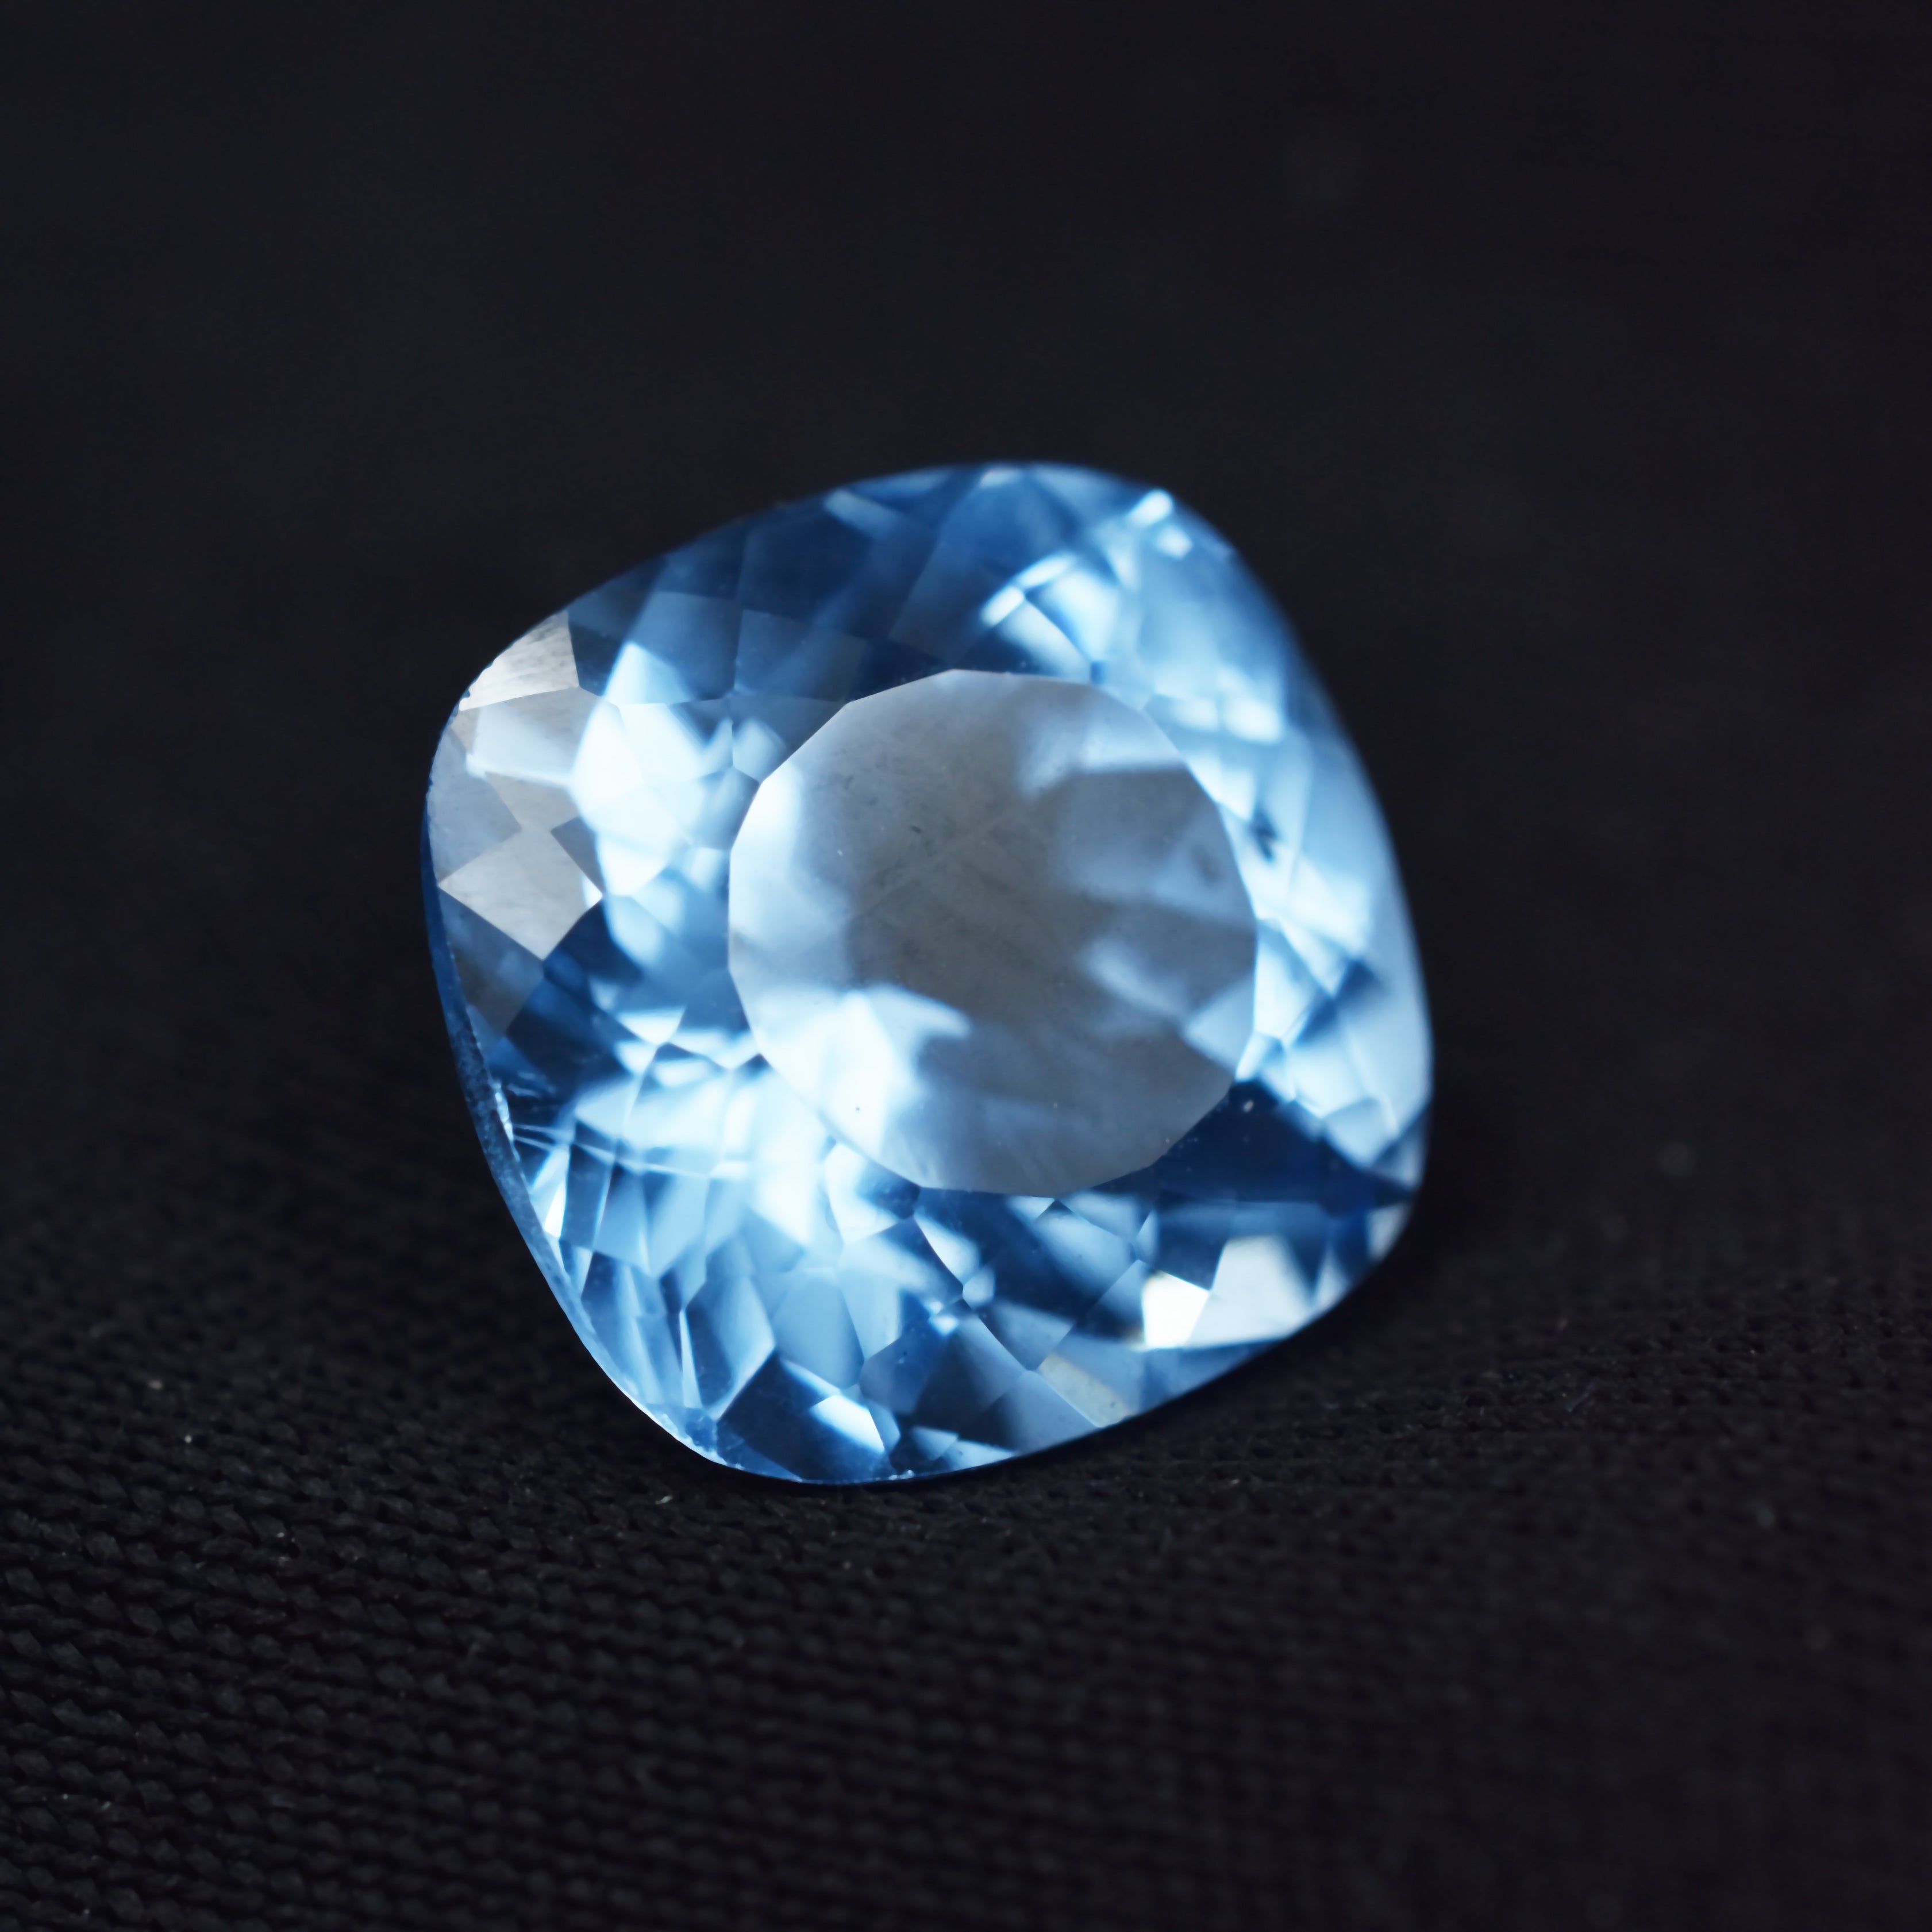 Bumper Offer On Light Sapphire Blue Gem 5.95 Carat Square Cushion Cut Certified Natural Ceylon Sapphire Beautiful Blue Sapphire Gemstone